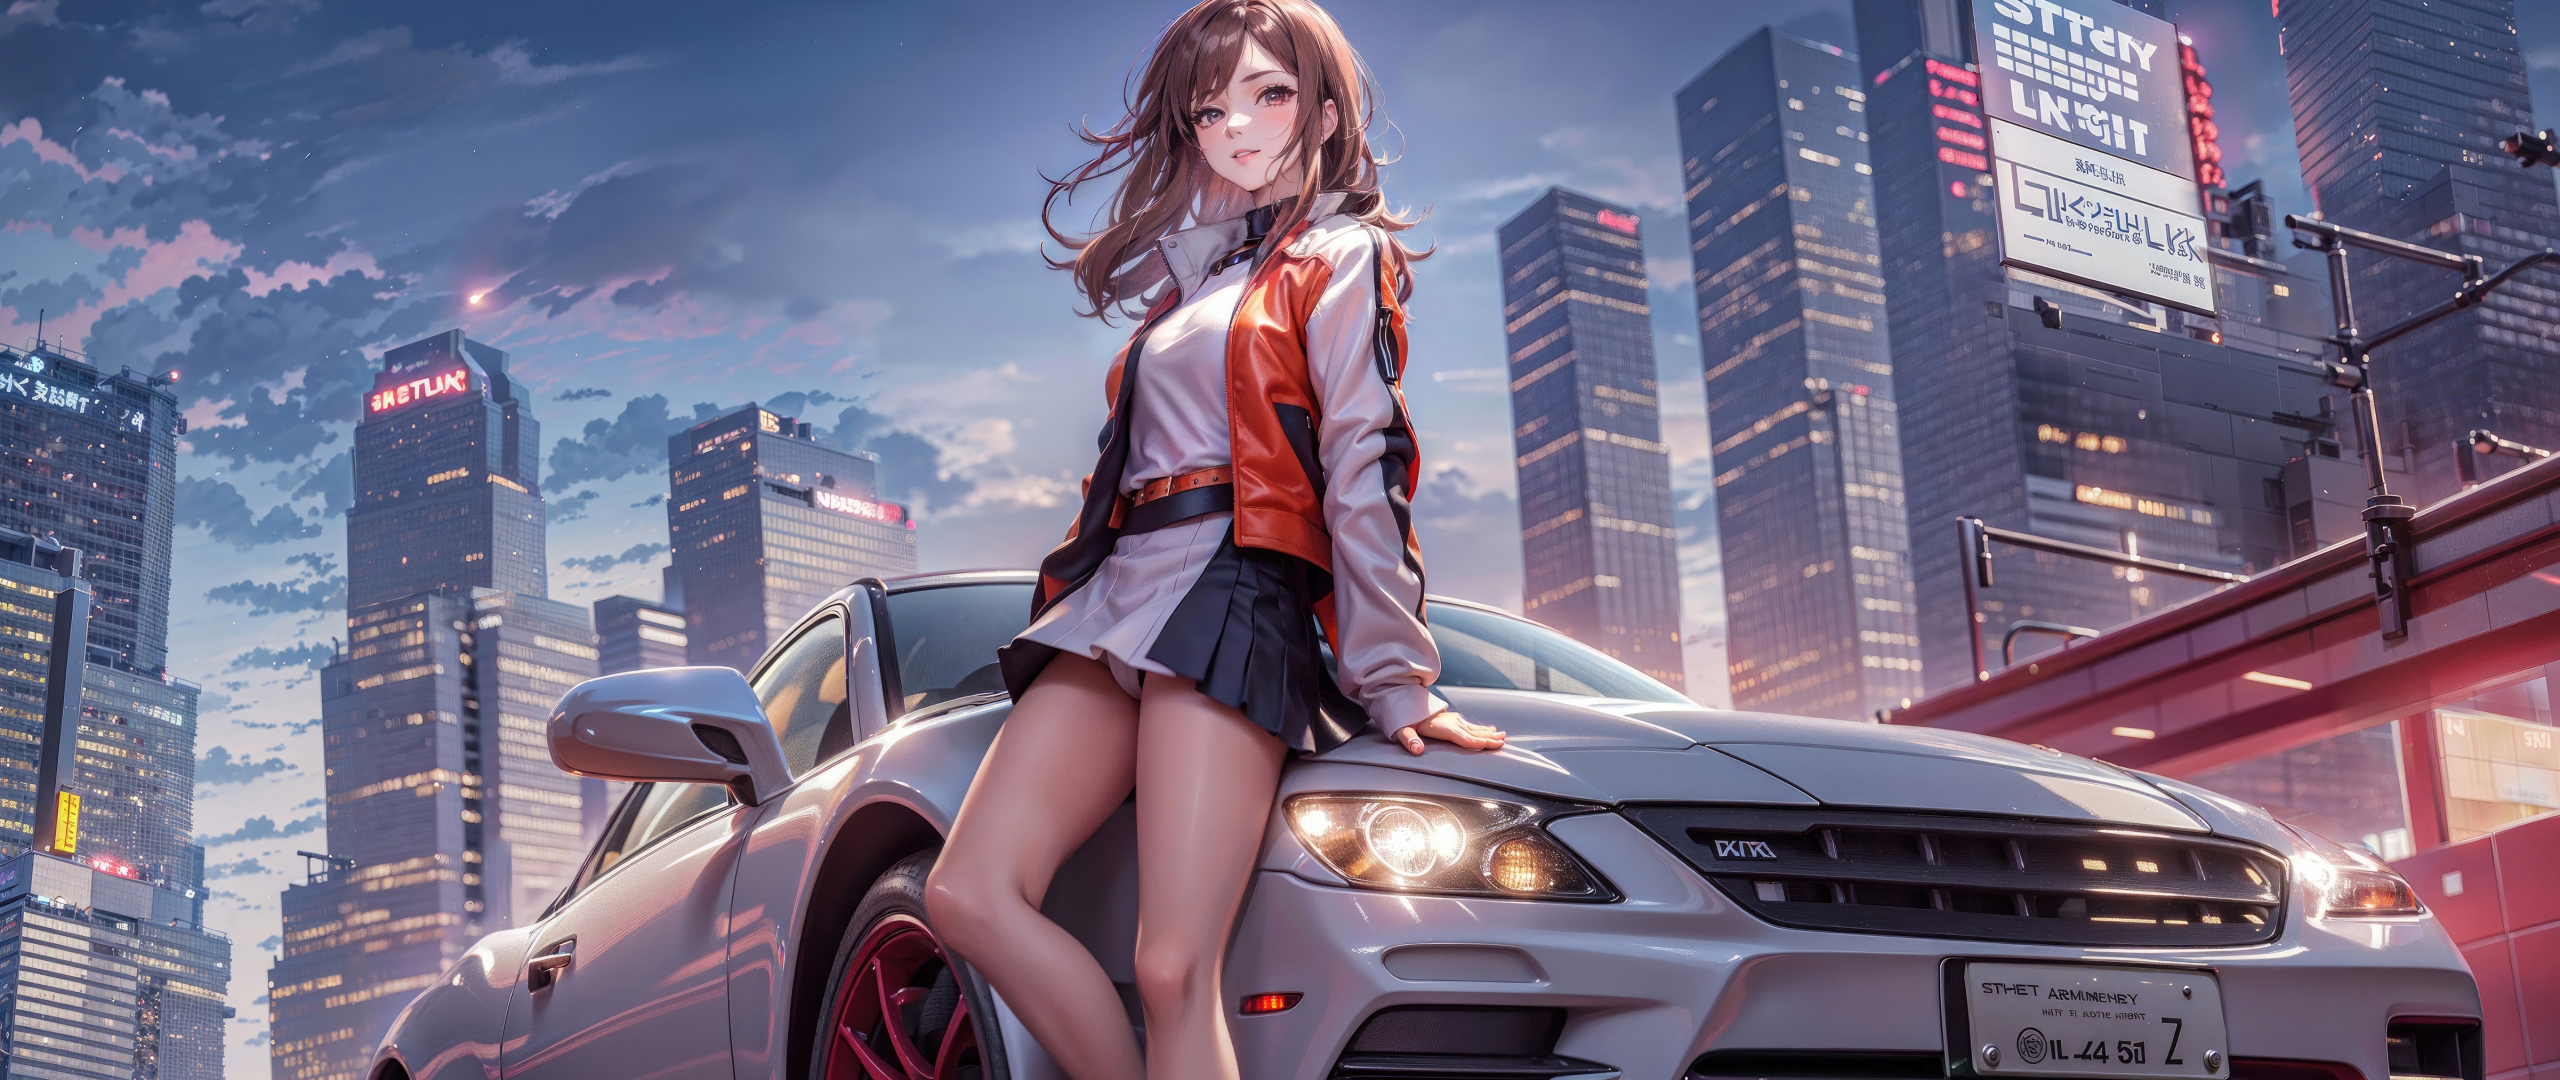 Anime girl with a car, beautiful, art, 2560x1080 wallpaper